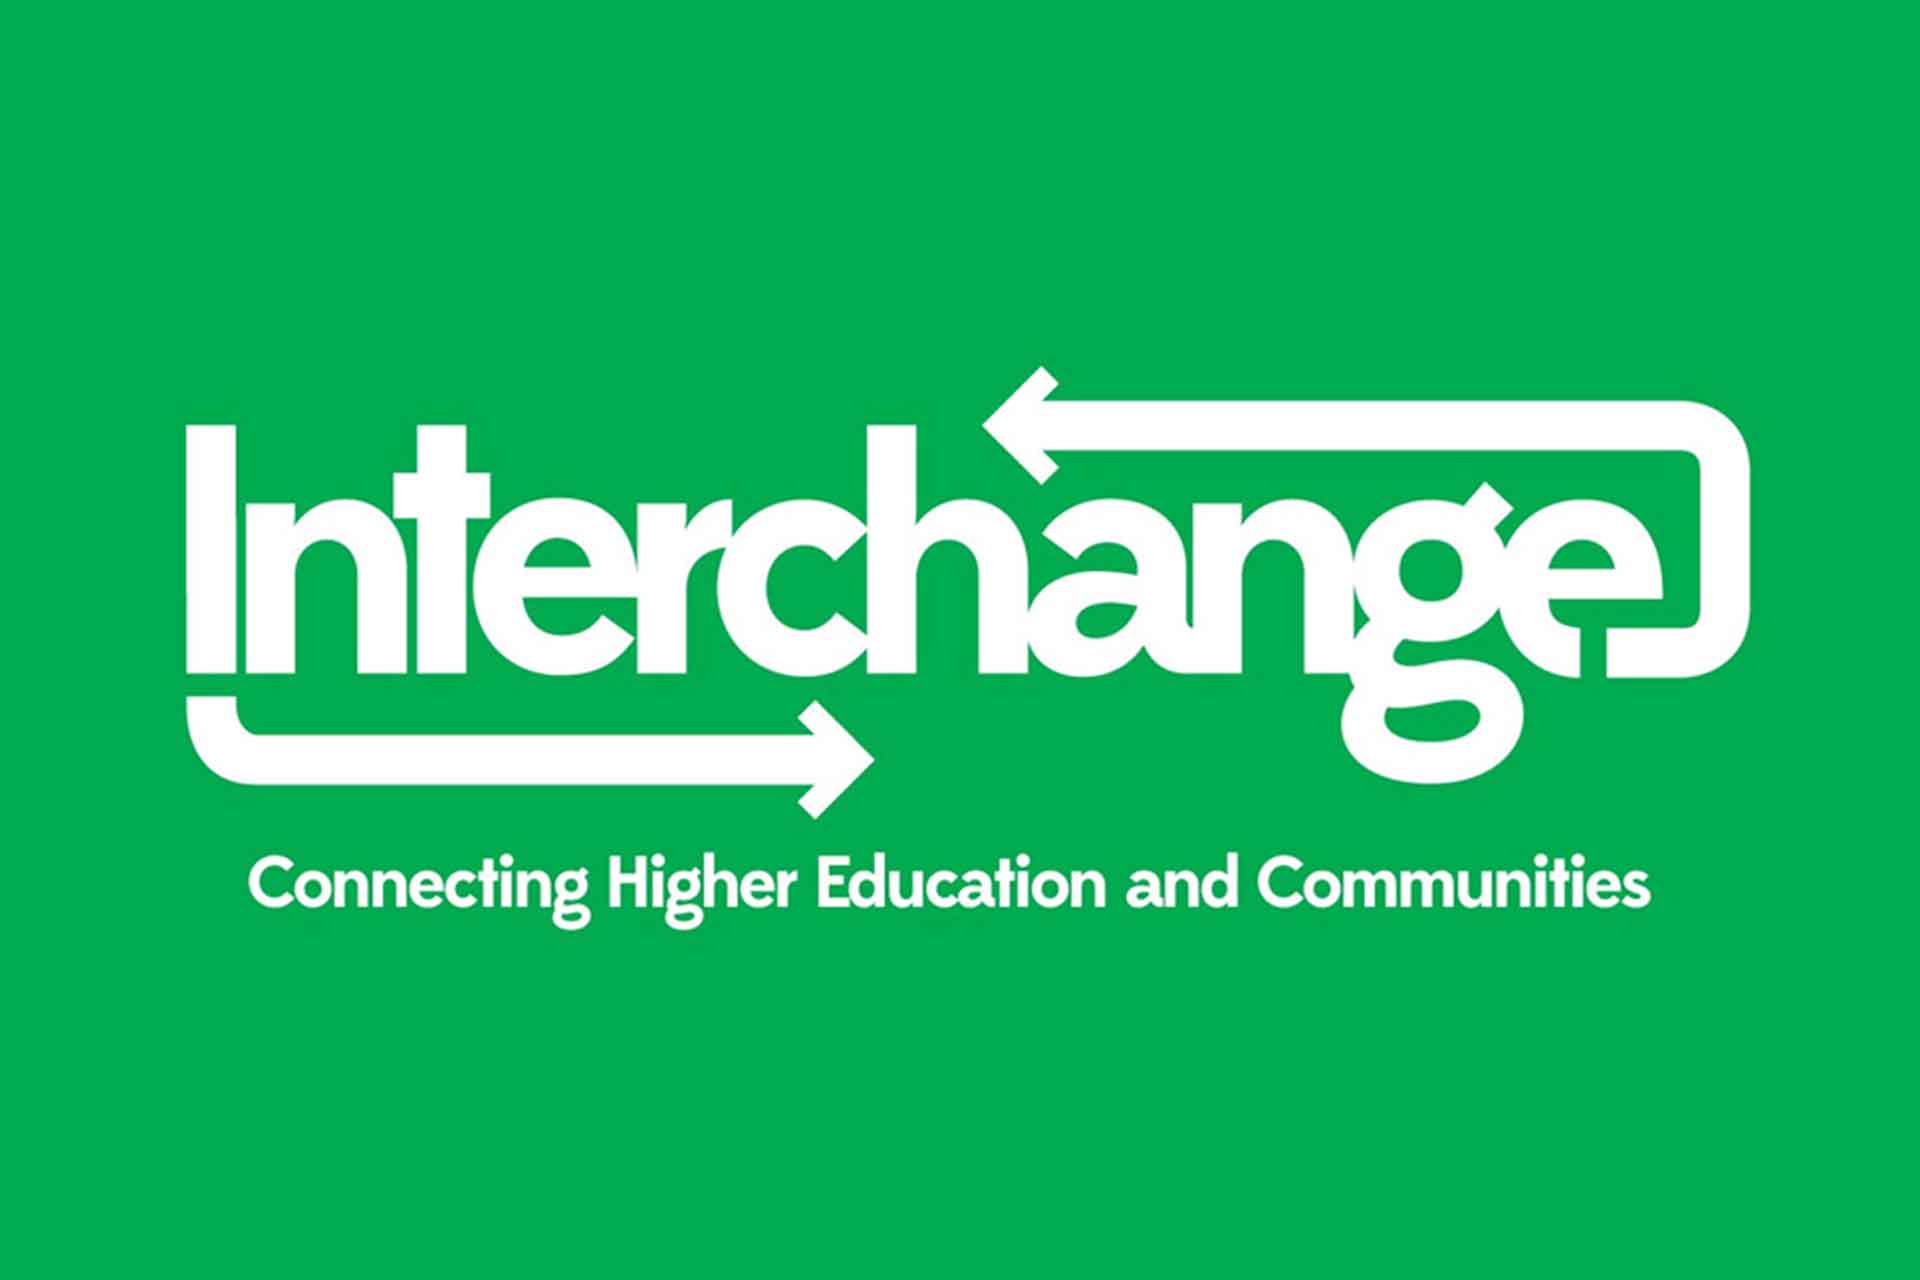 Interchange Logo white text on a green background.